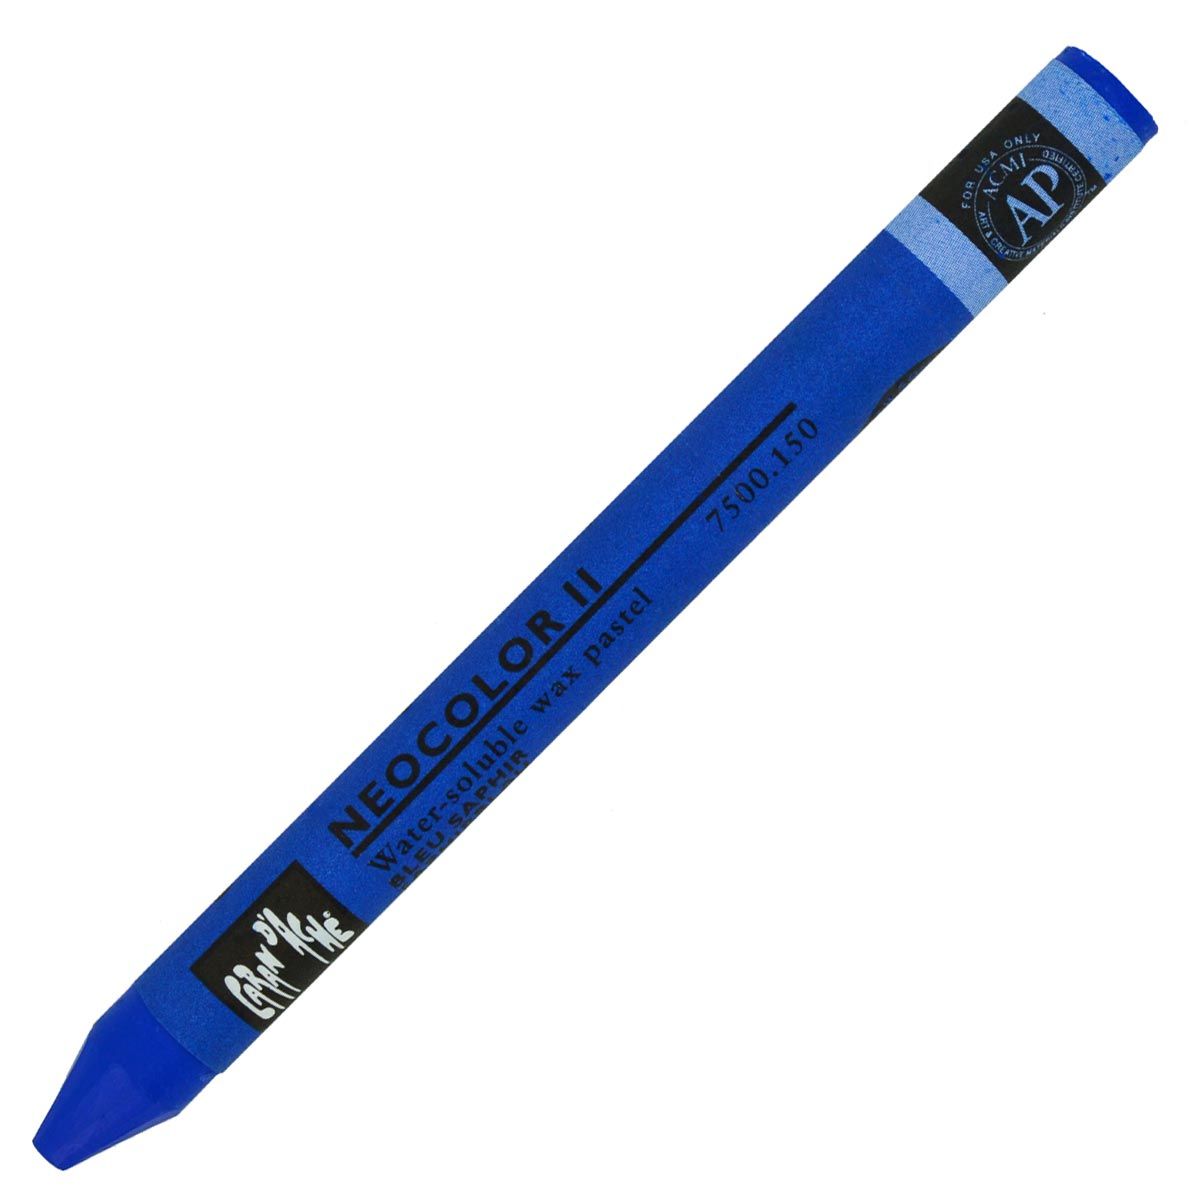 Neocolor II Aquarelle Artists’ Crayon - Sapphire Blue 150